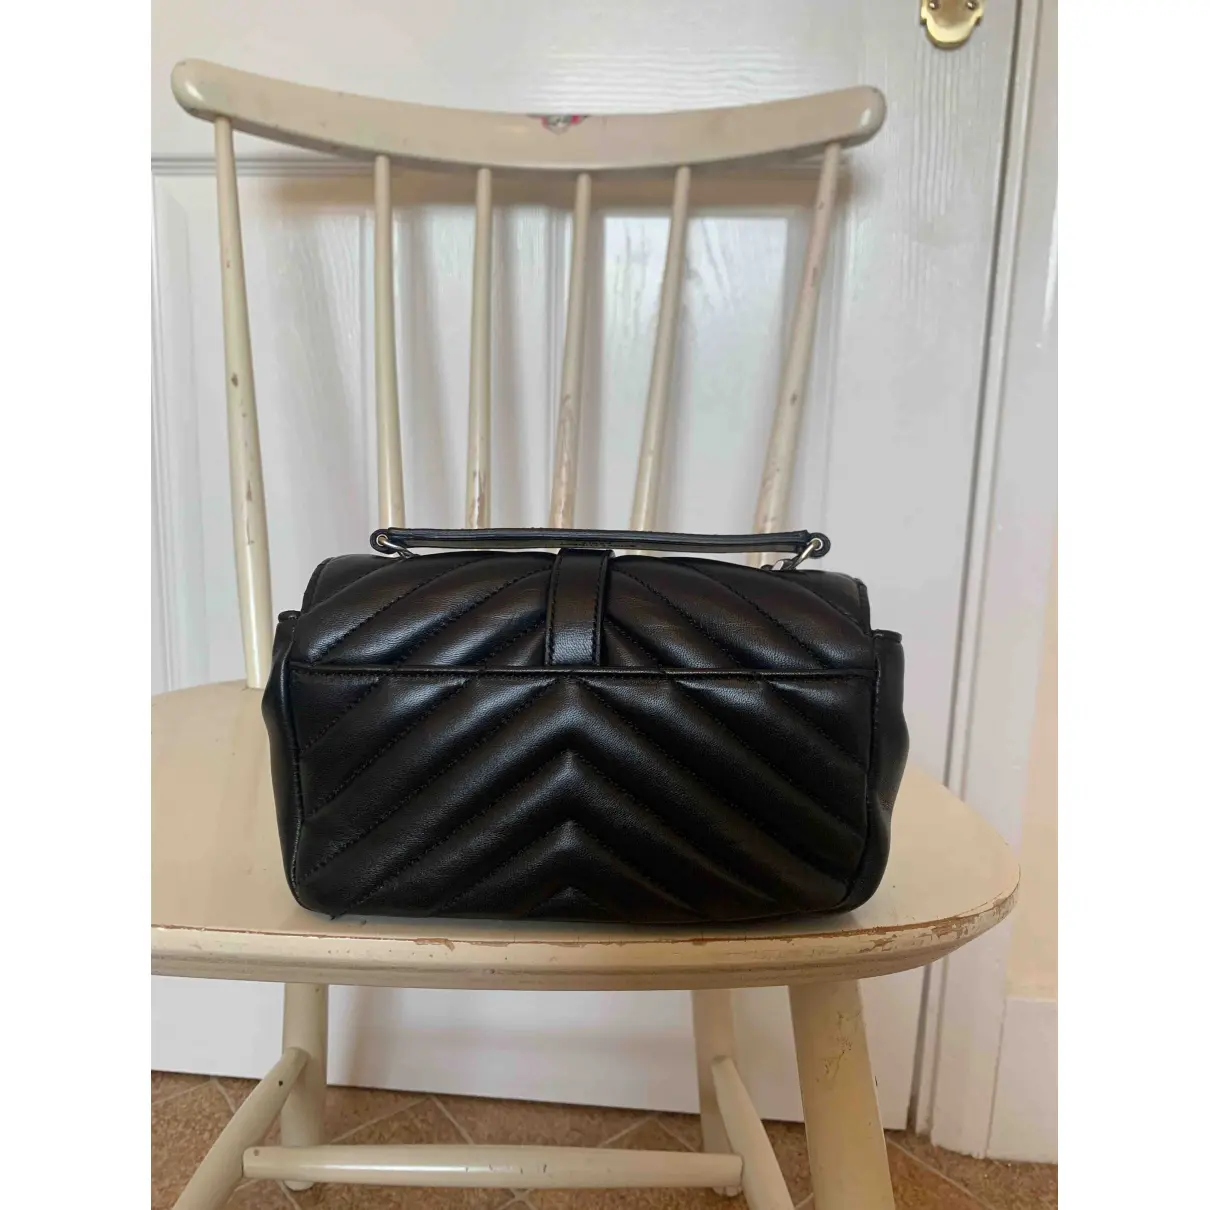 Buy Saint Laurent Baby monogramme leather mini bag online